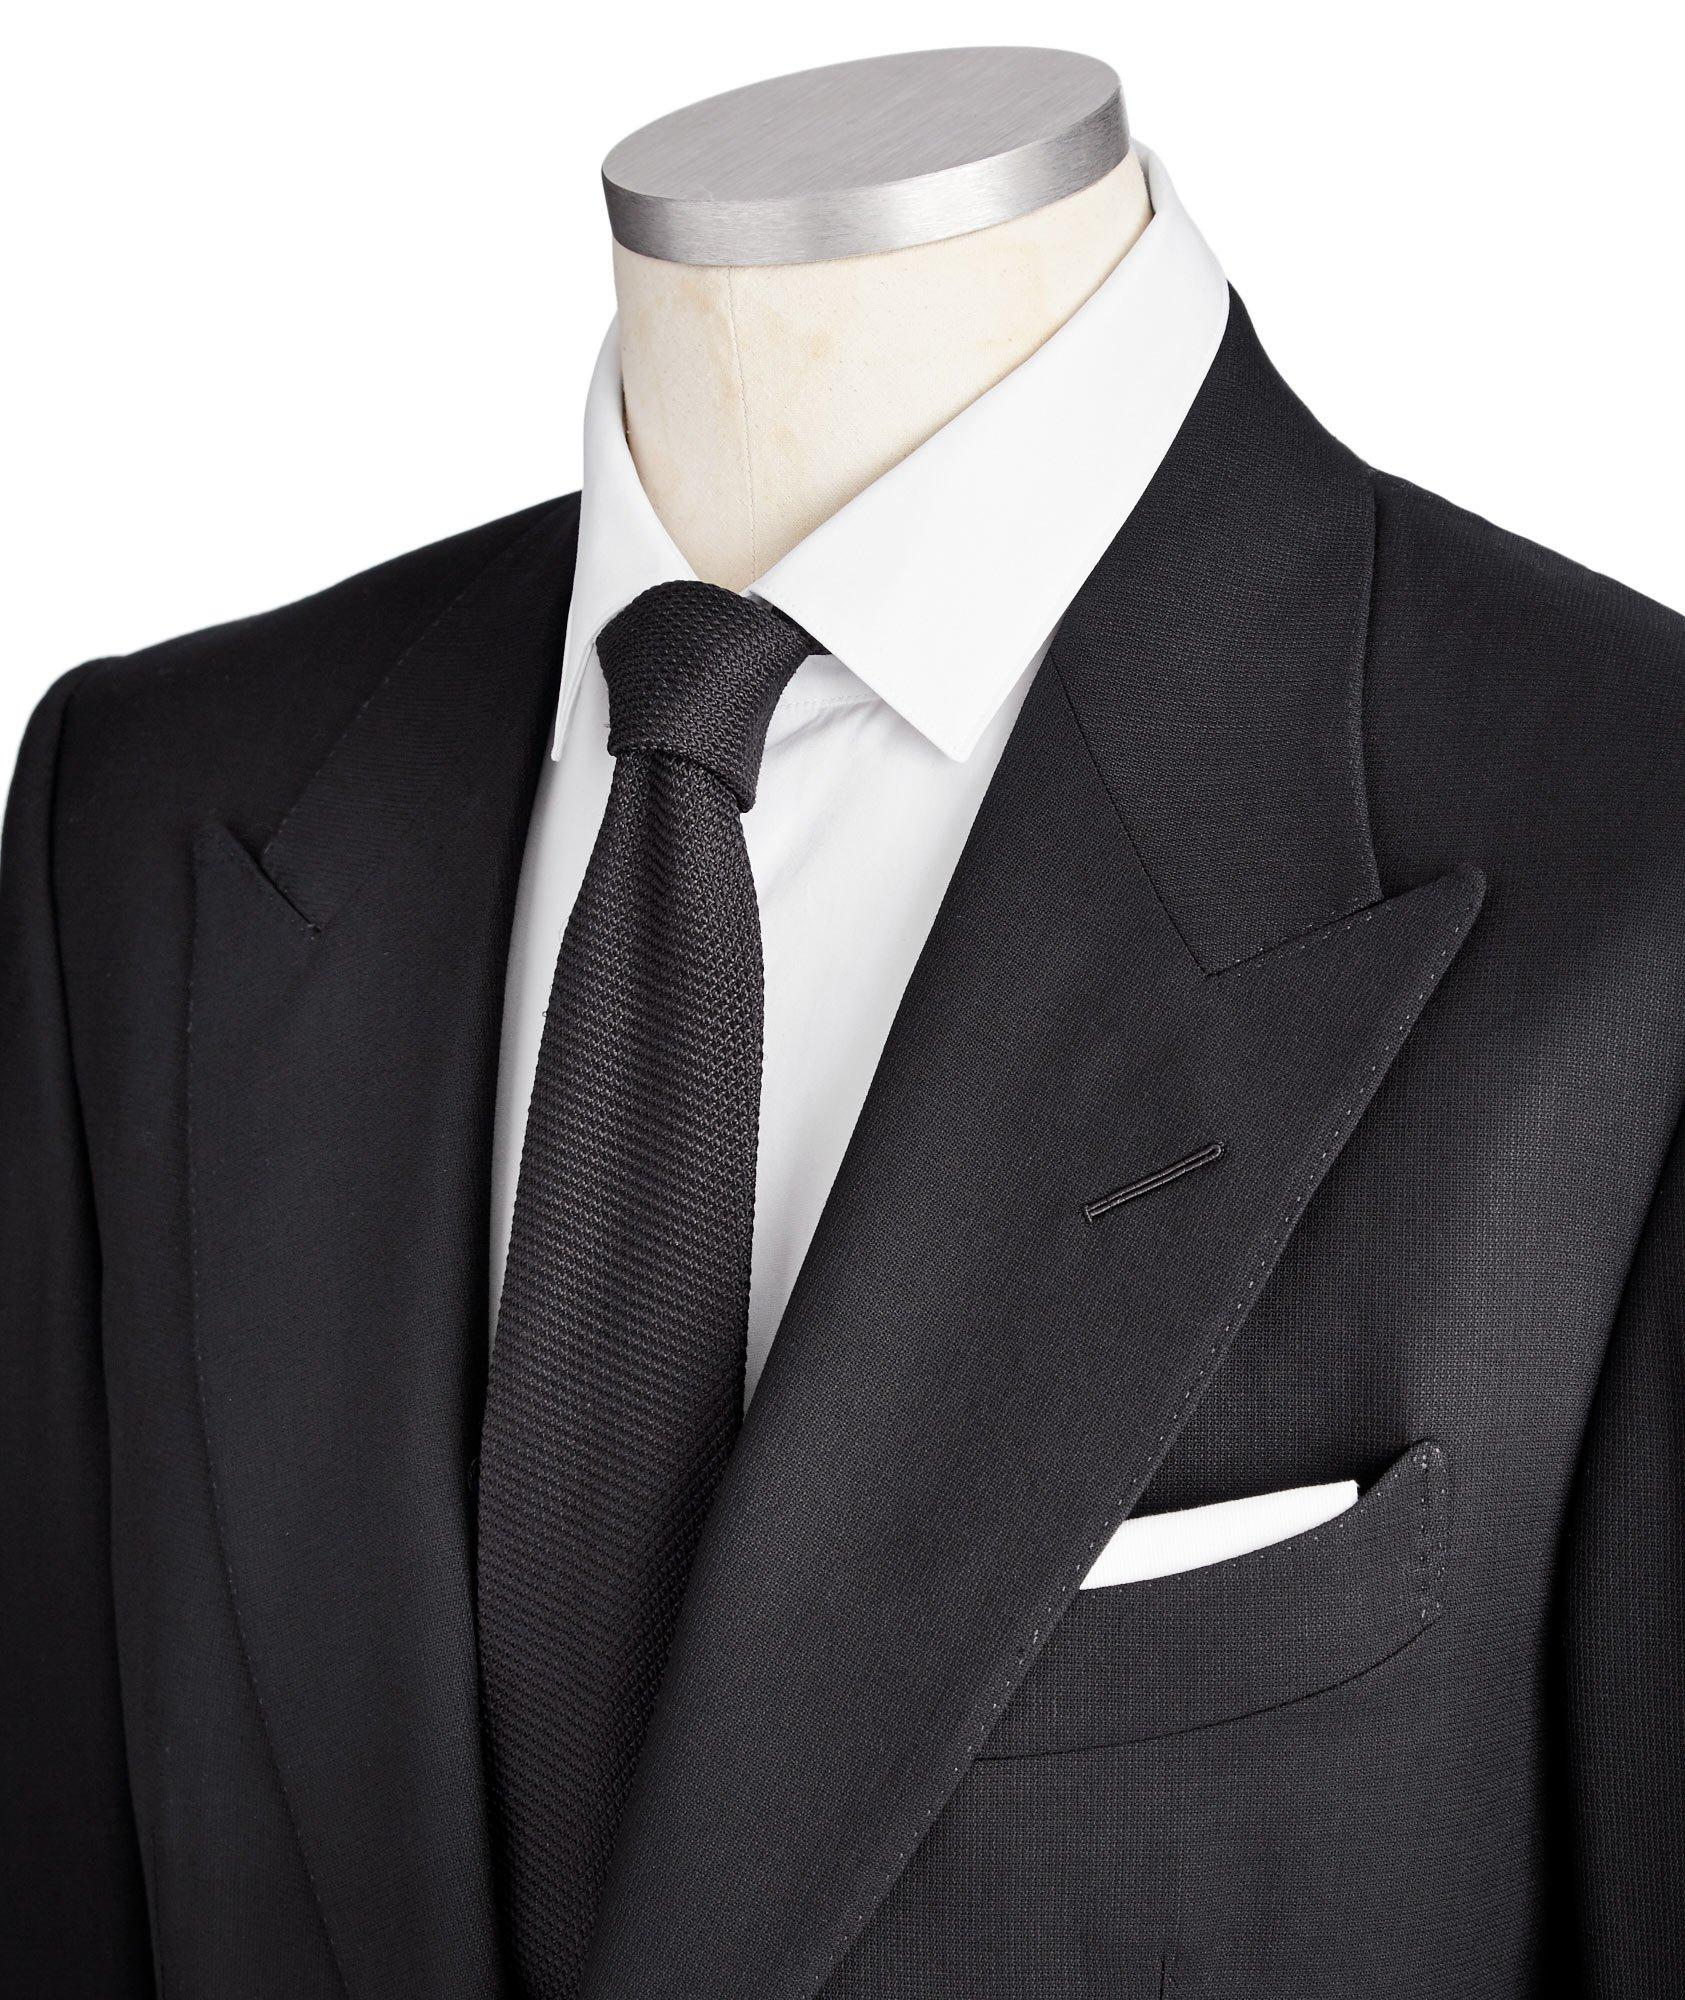 Windsor Suit image 1